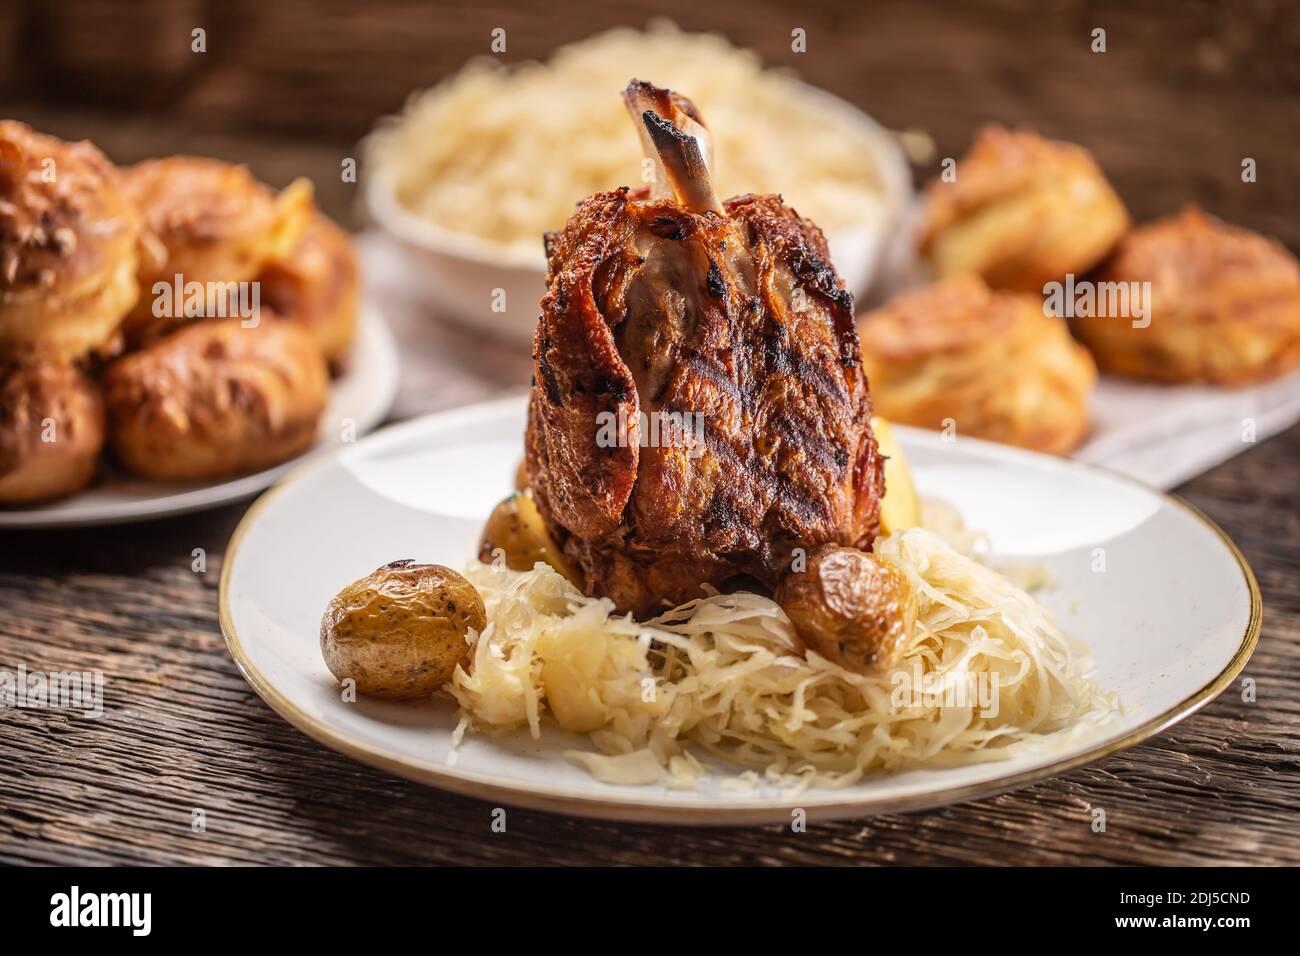 Bavarian pork knuckle with sauerkraut and baked potatoes. Stock Photo